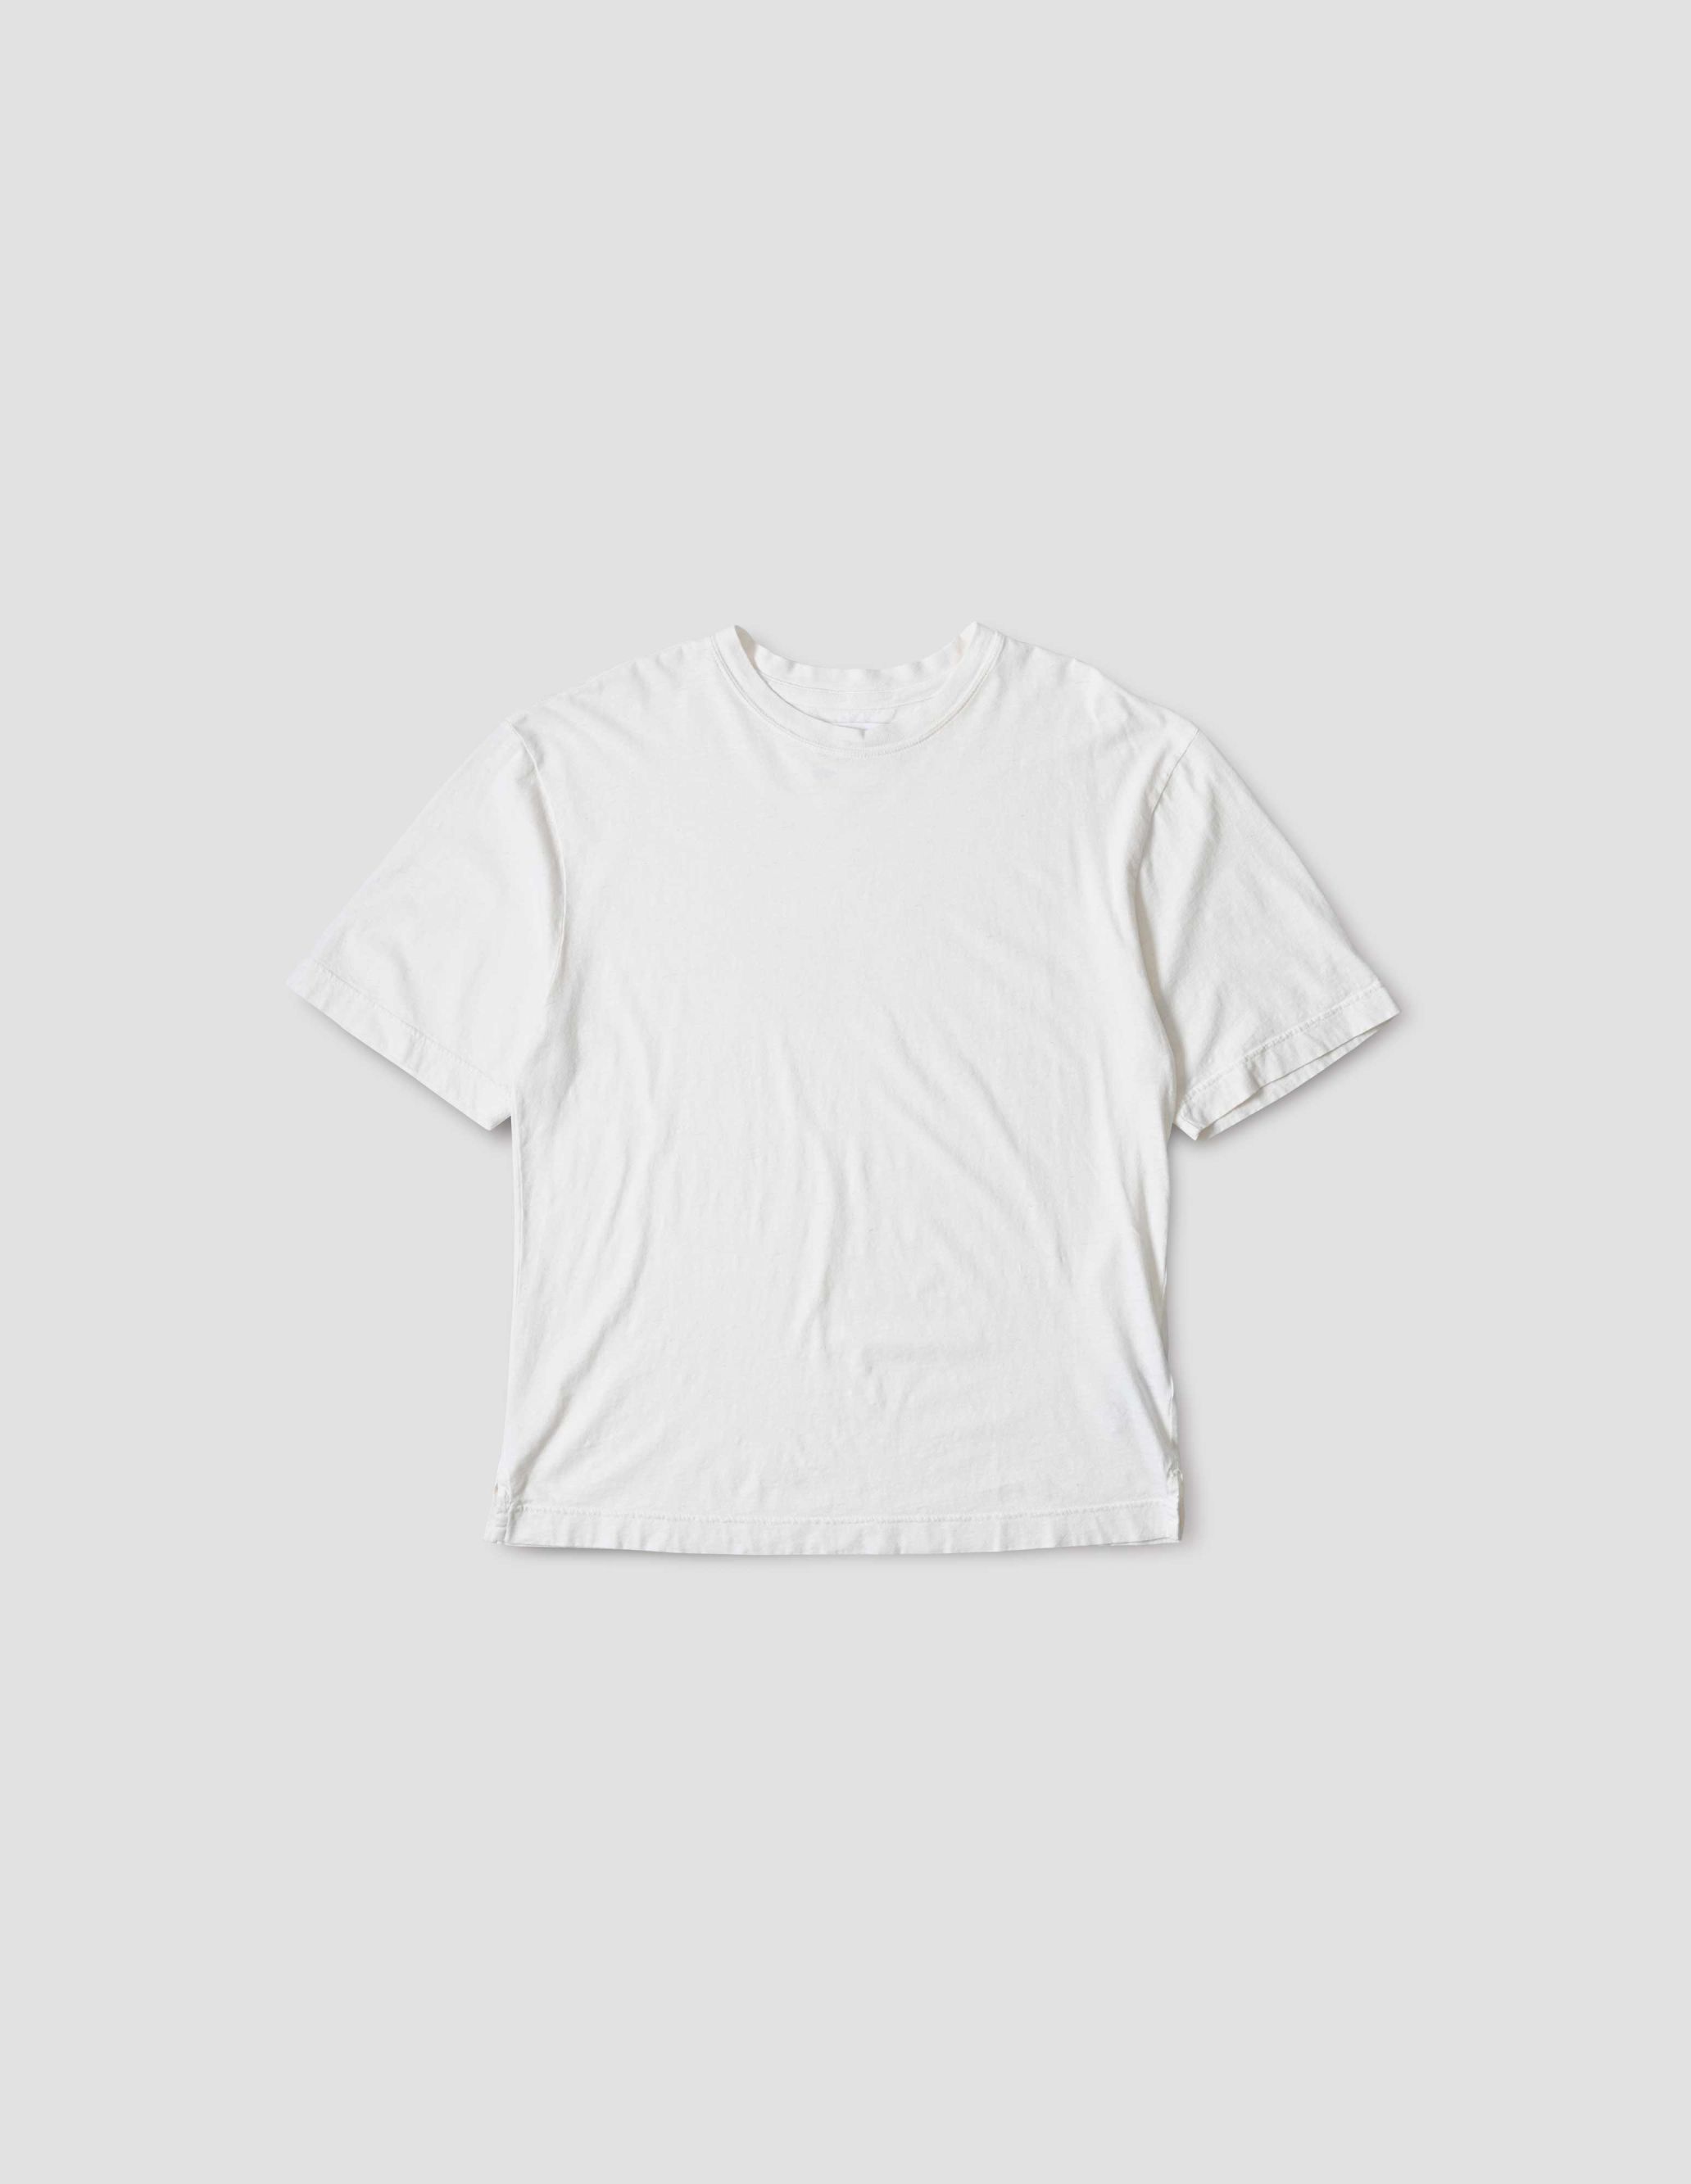 MARGARET HOWELL - White cotton linen simple T shirt | MHL. by Margaret ...